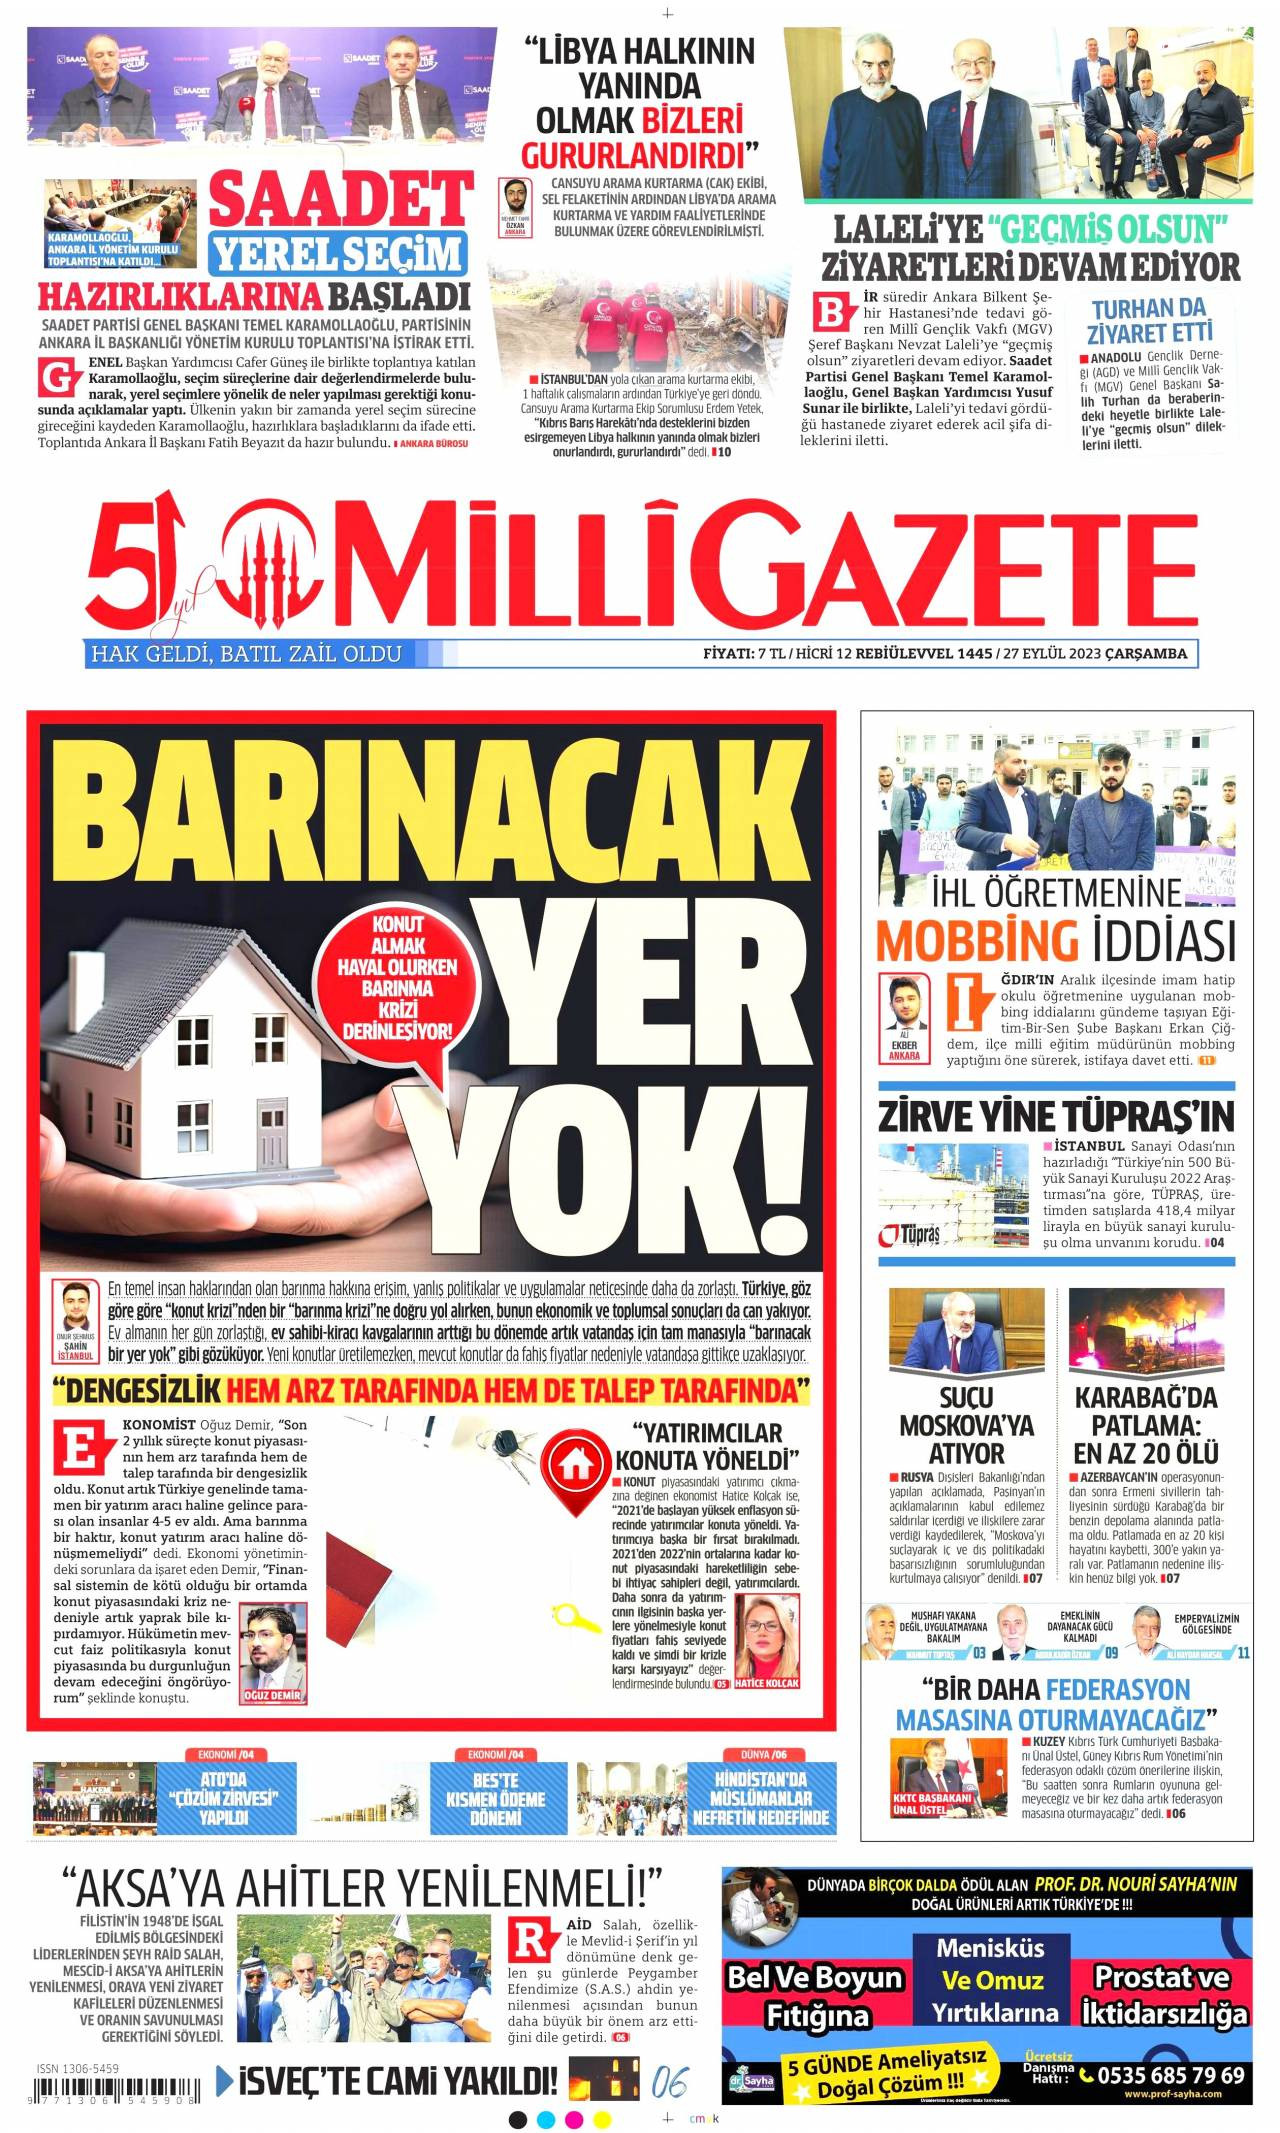 Milli Gazete gazetesi manşet ilk sayfa oku